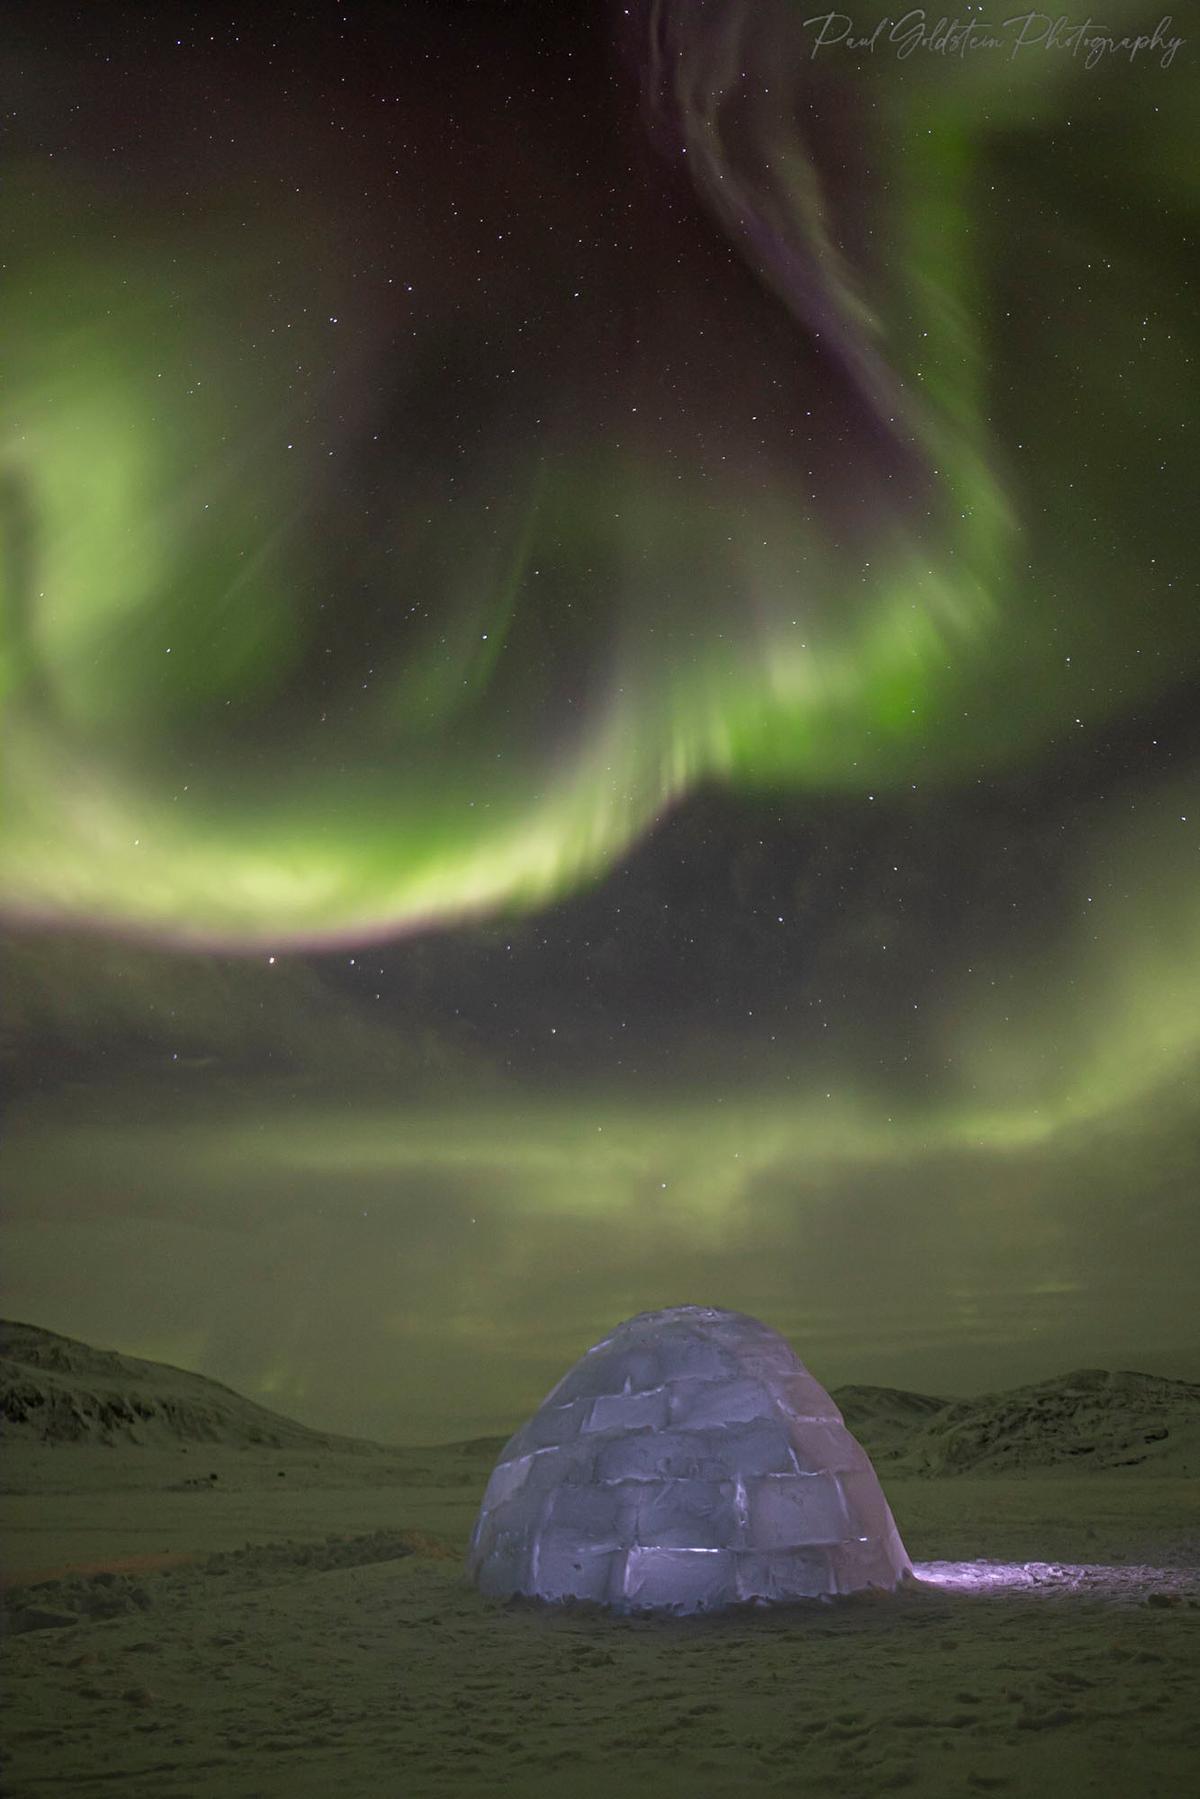 Northern lights dancing above an igloo in Nunavut, Canada. (Courtesy ofPaul Goldstein)